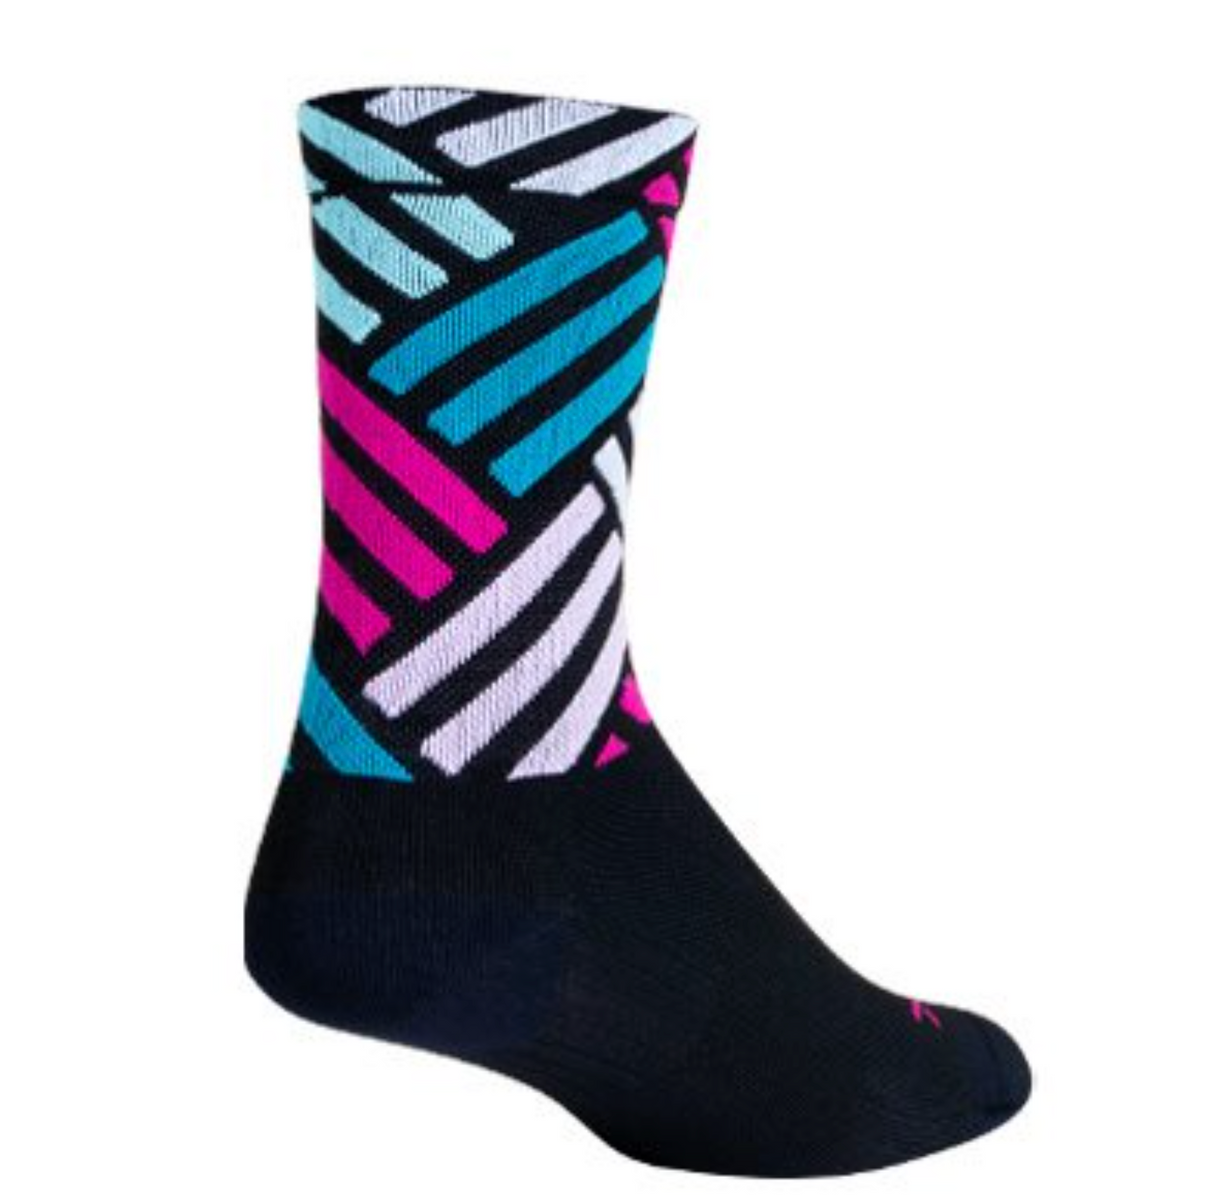 Sock Guy SGX Weave Socks 6" Cuff - Made in USA - Size L/XL